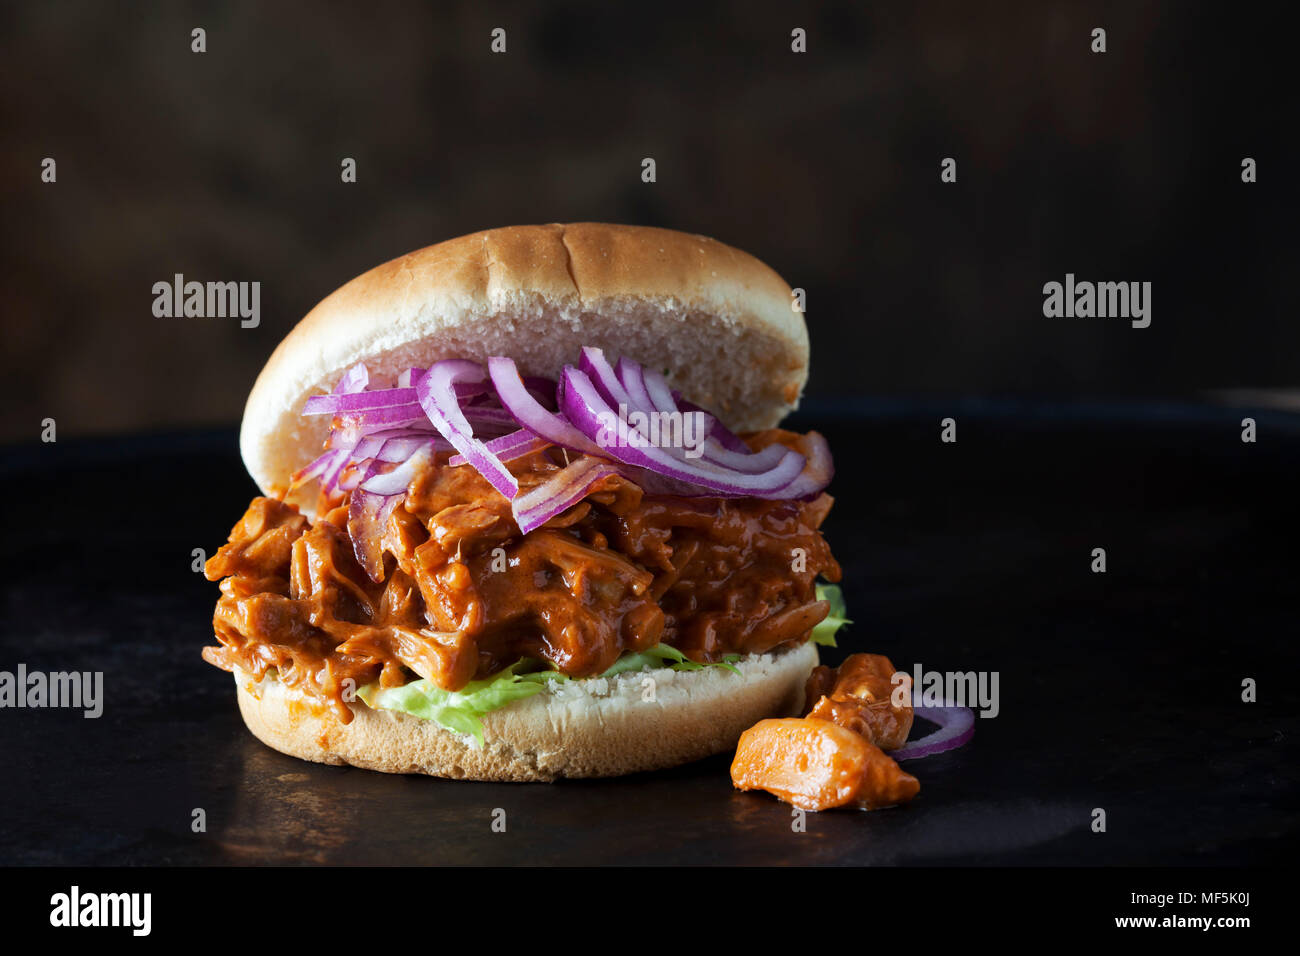 Burger with Jackfruit goulash in front of dark background Stock Photo